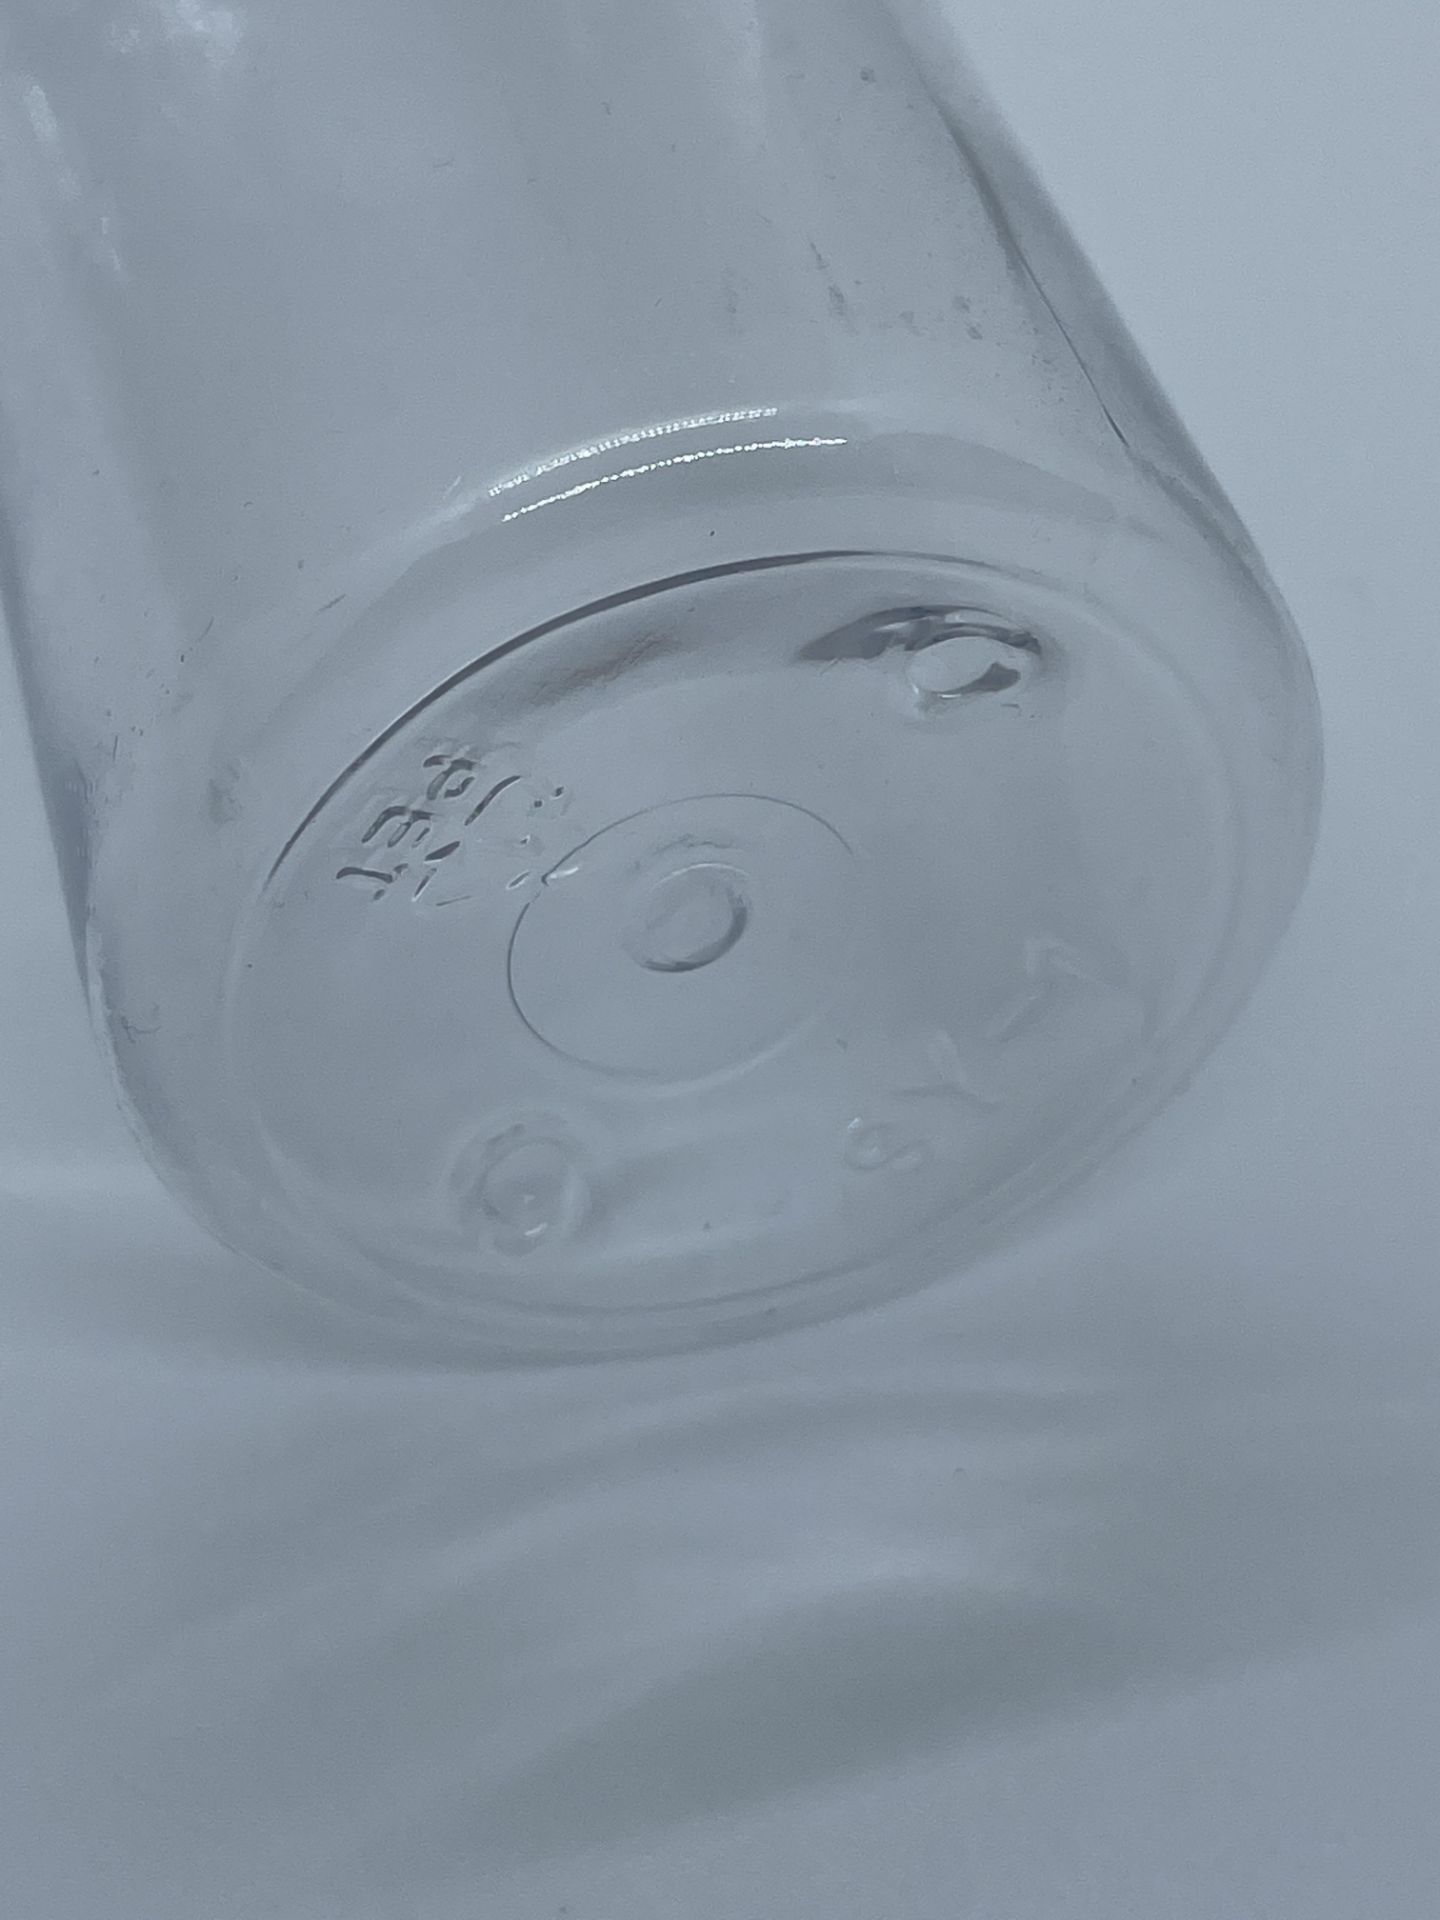 75,000 - Clear Plastic Bullet 8 oz Empty Bottles, 24-410 Threading Neck, 6.25" Tall, 2" Diameter - Image 10 of 10